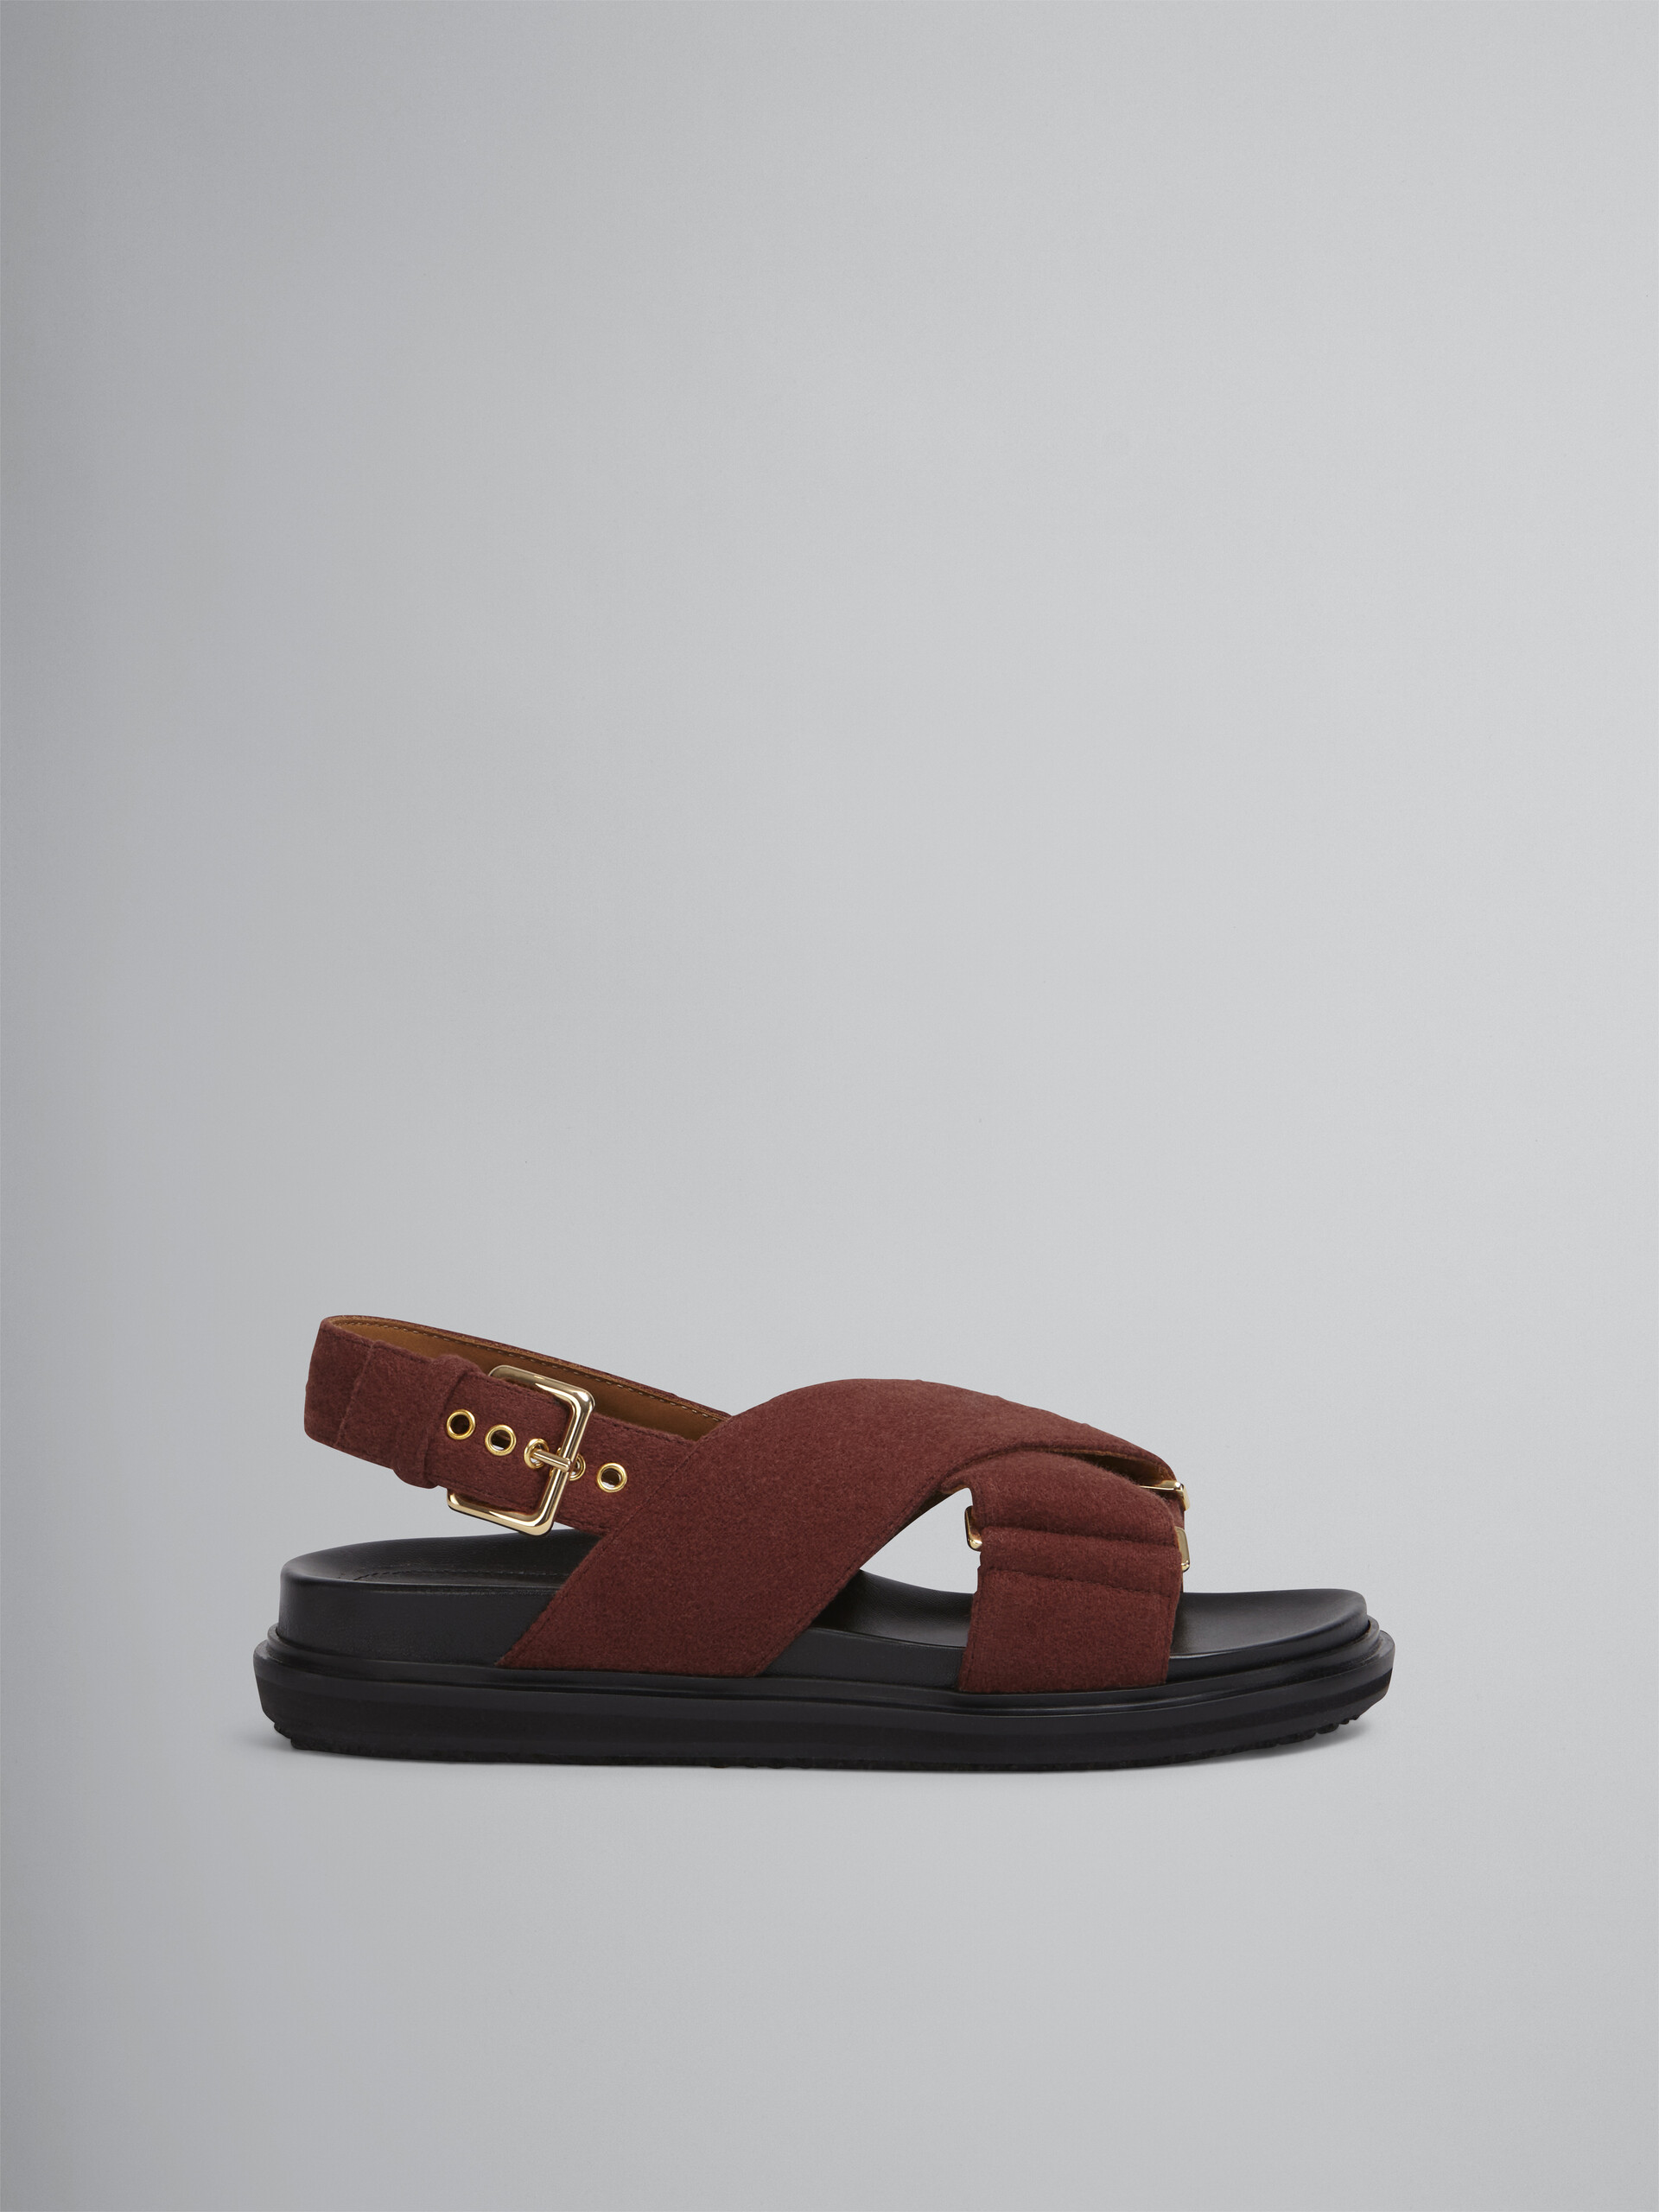 Criss-cross fussbett in brown wool felt - Sandals - Image 1